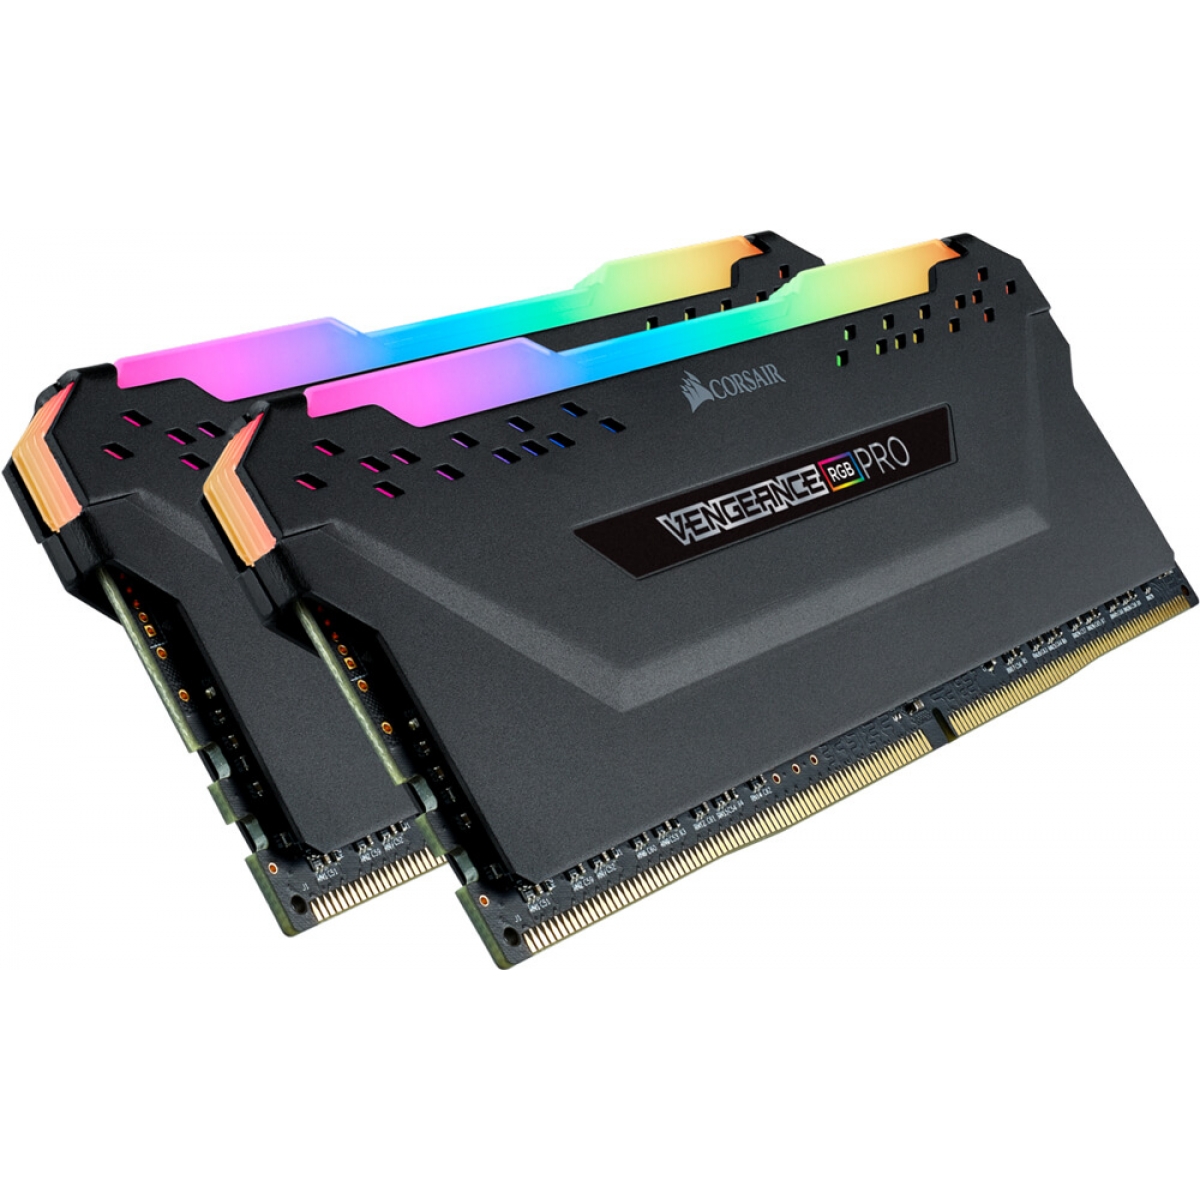 Memória DDR4 Corsair Vengeance PRO, RGB, 16GB (2x8GB) 2666MHz, CMW16GX4M2A2666C16 